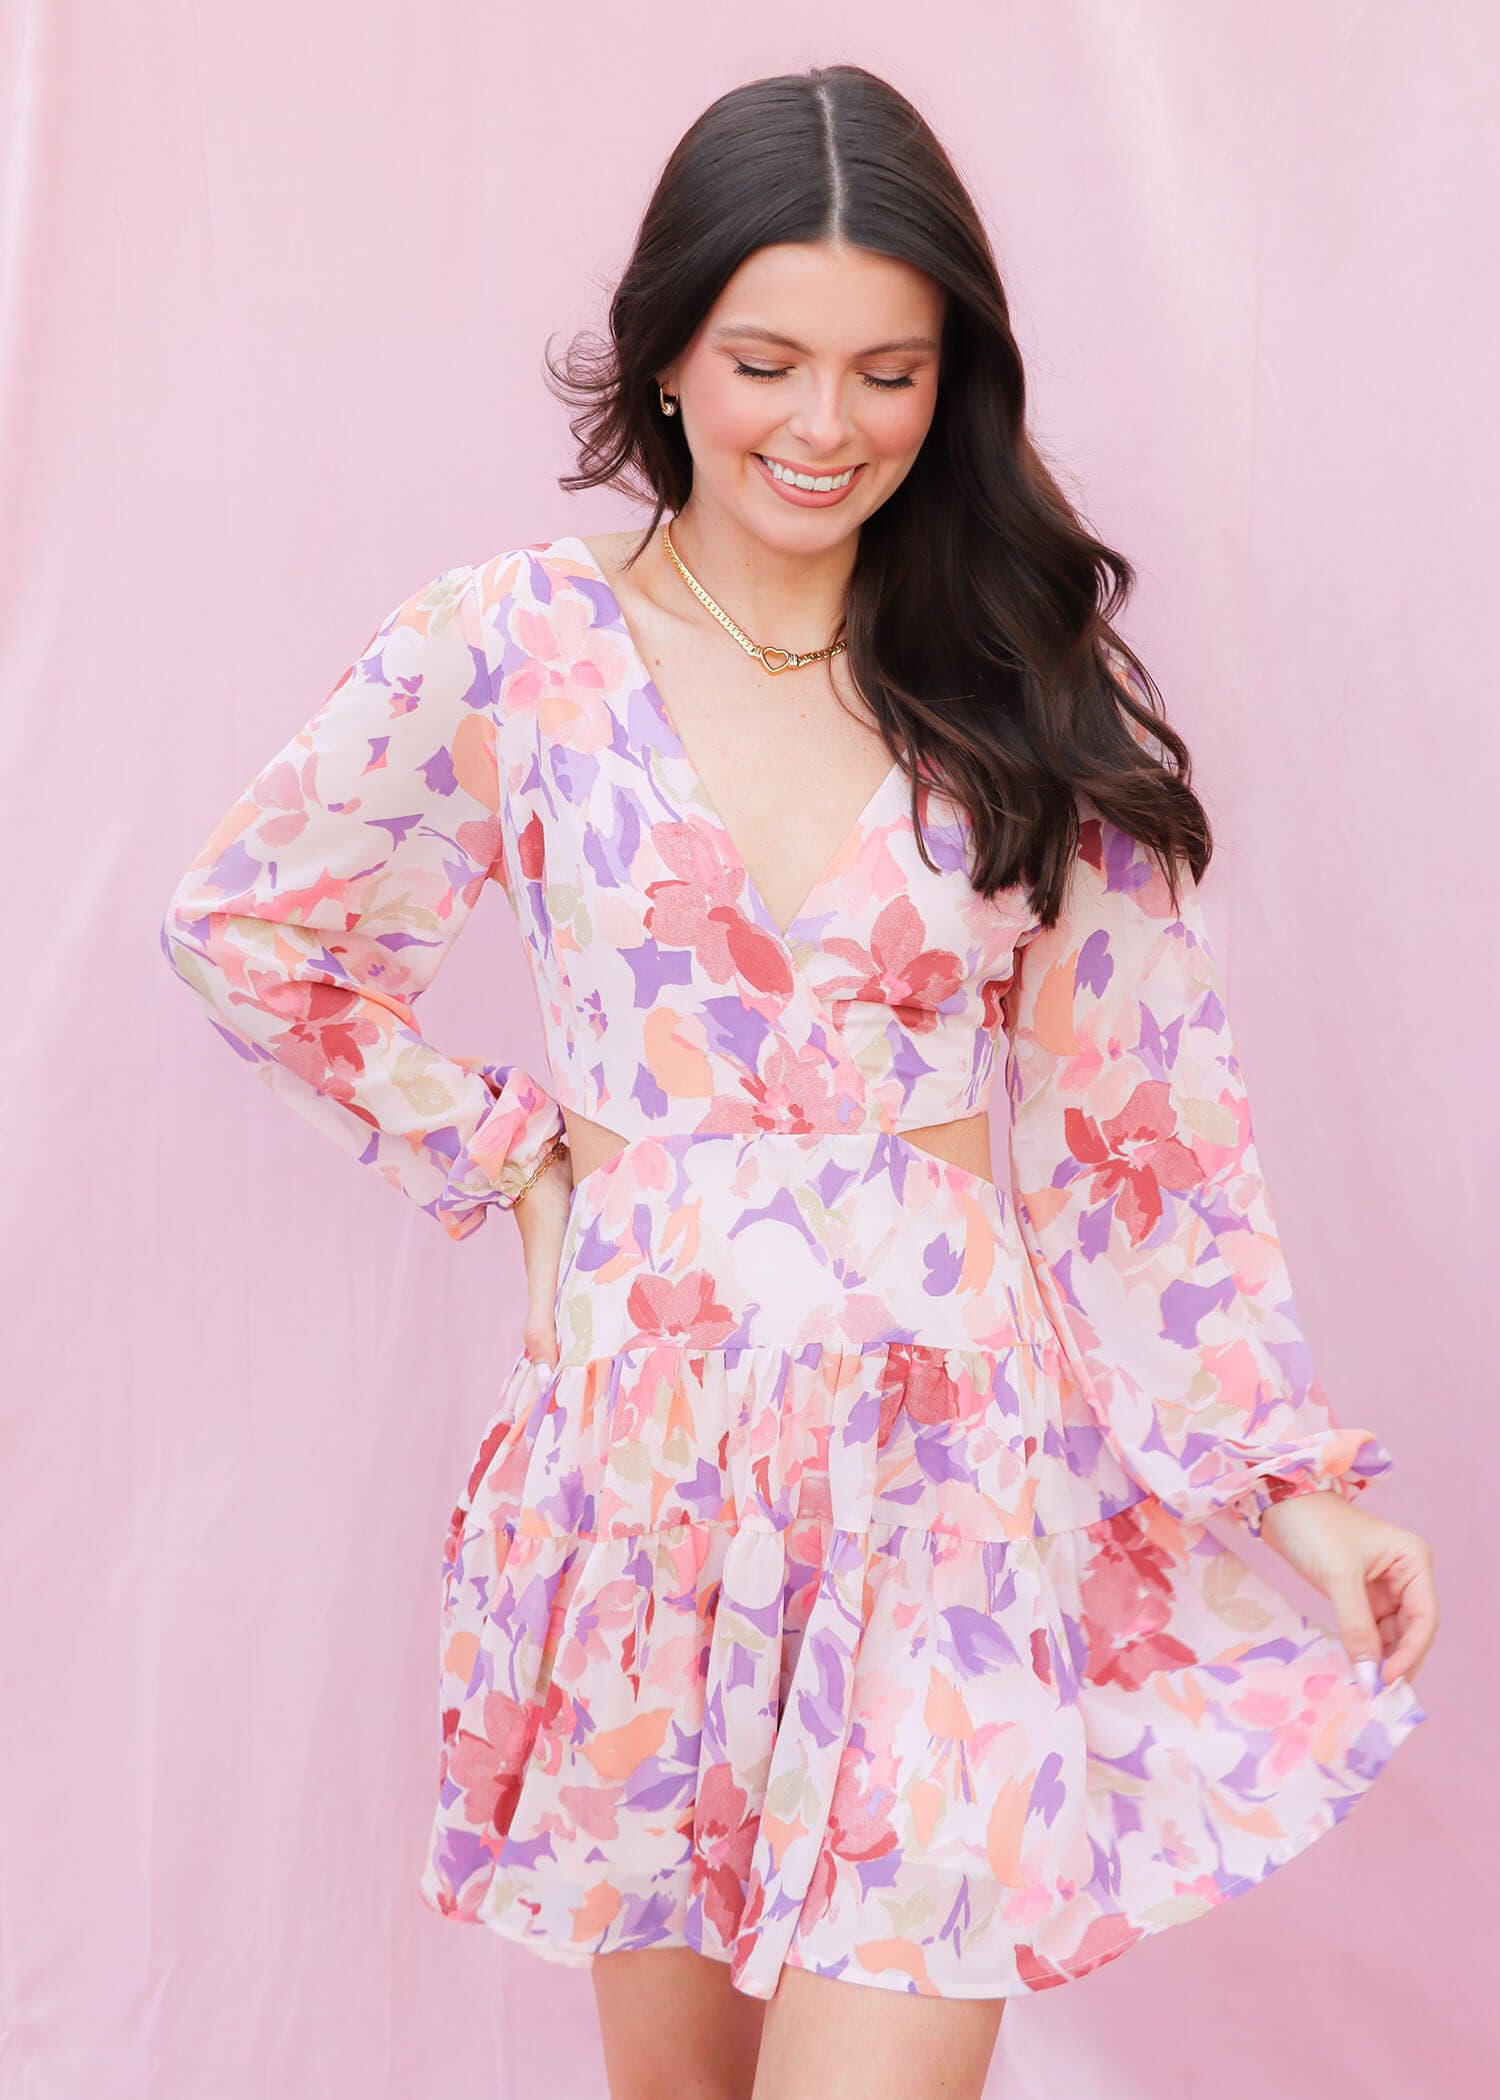 Flowers Are My Love Language Dress - Blush/Lilac Dress MerciGrace Boutique.